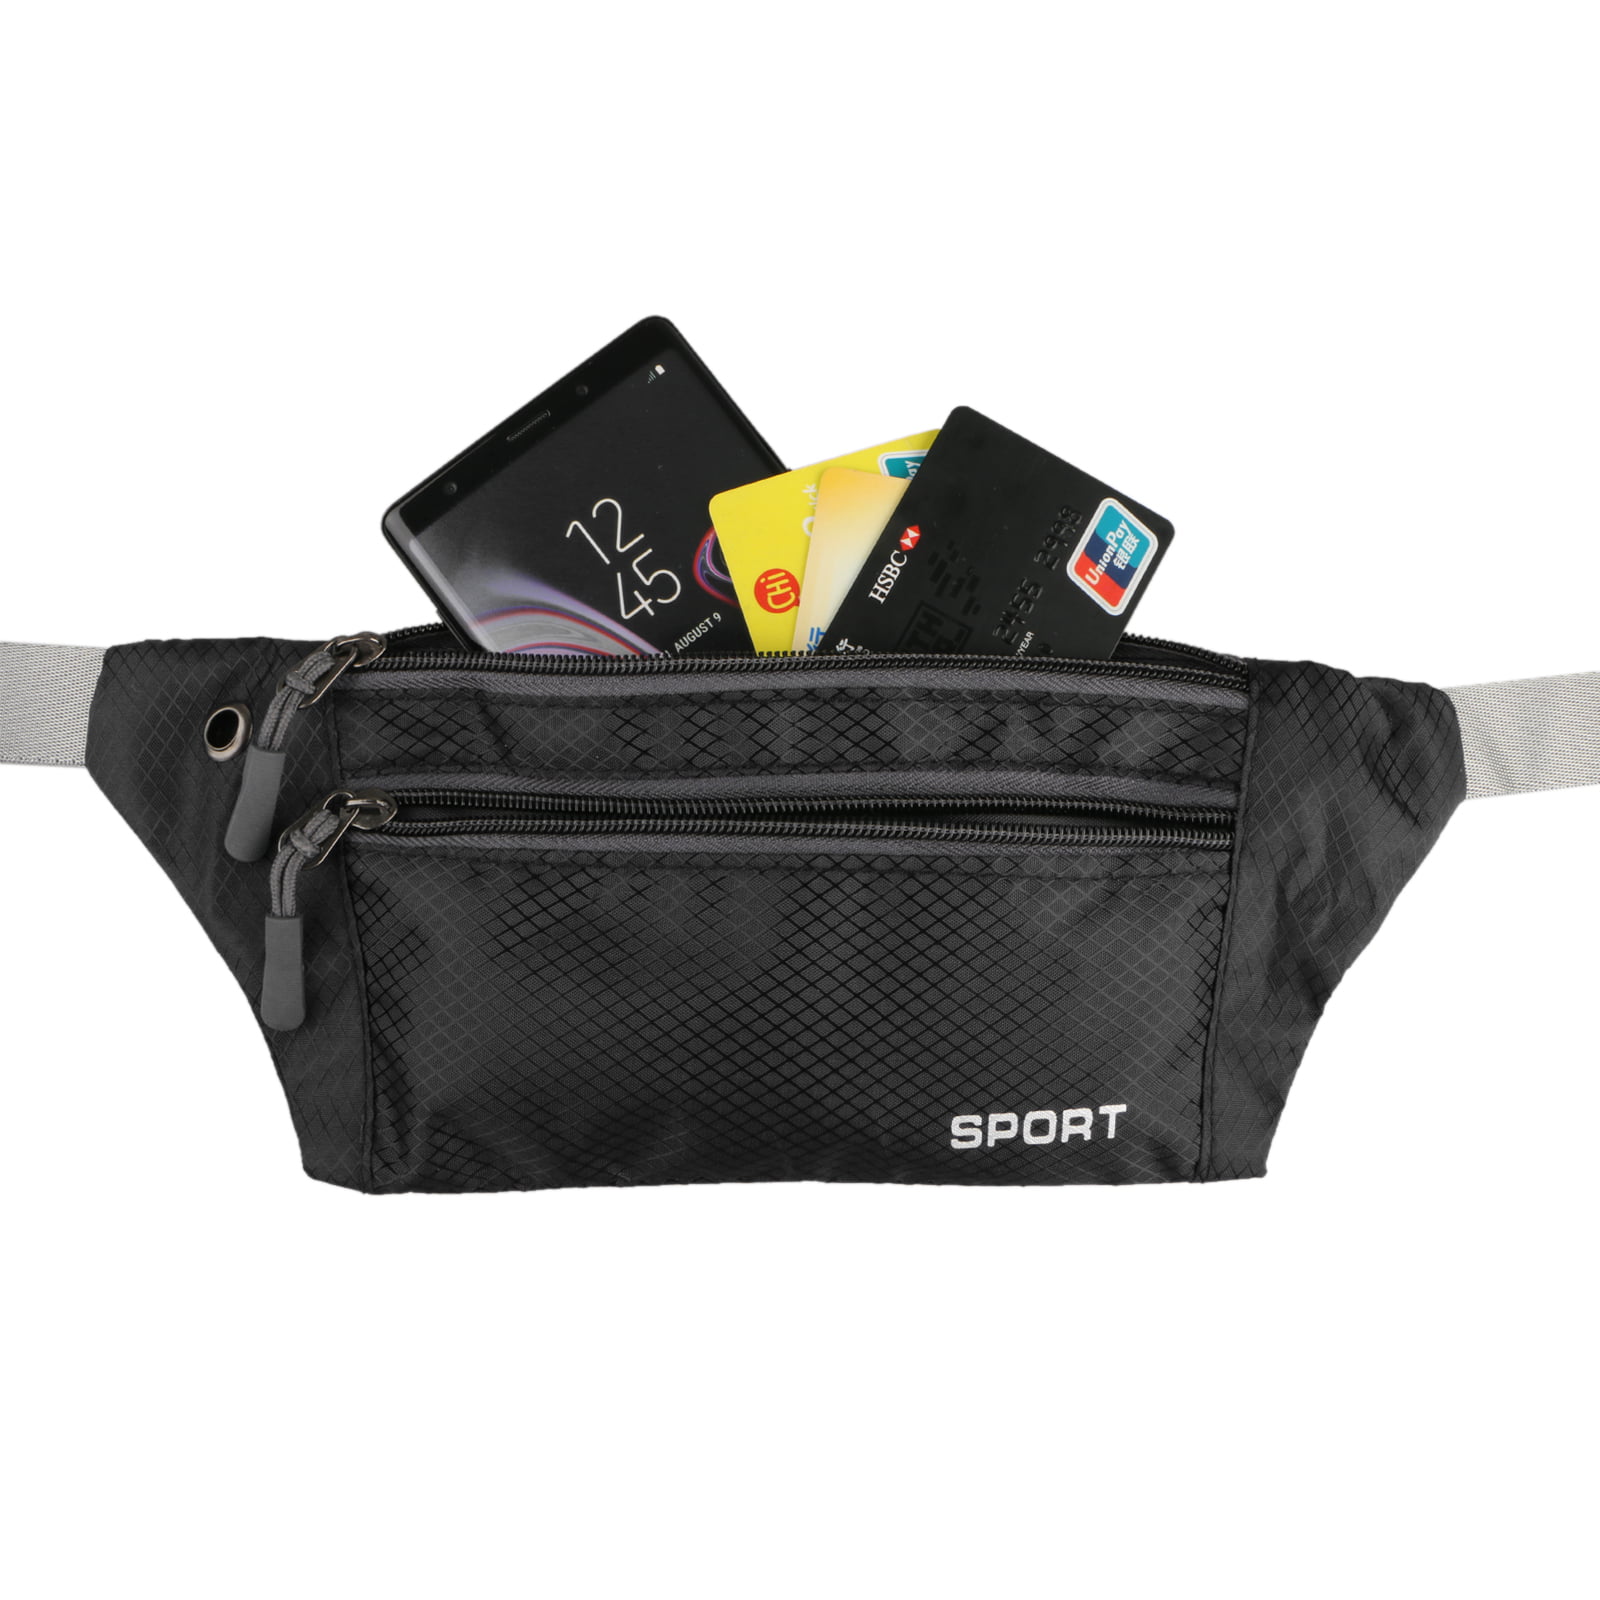 Lightweight Large Capacity Bumbag for Outdoor Walking Running whatUneed Waterproof Waist Bag for Men Women Storaging Wallet Phone Keys